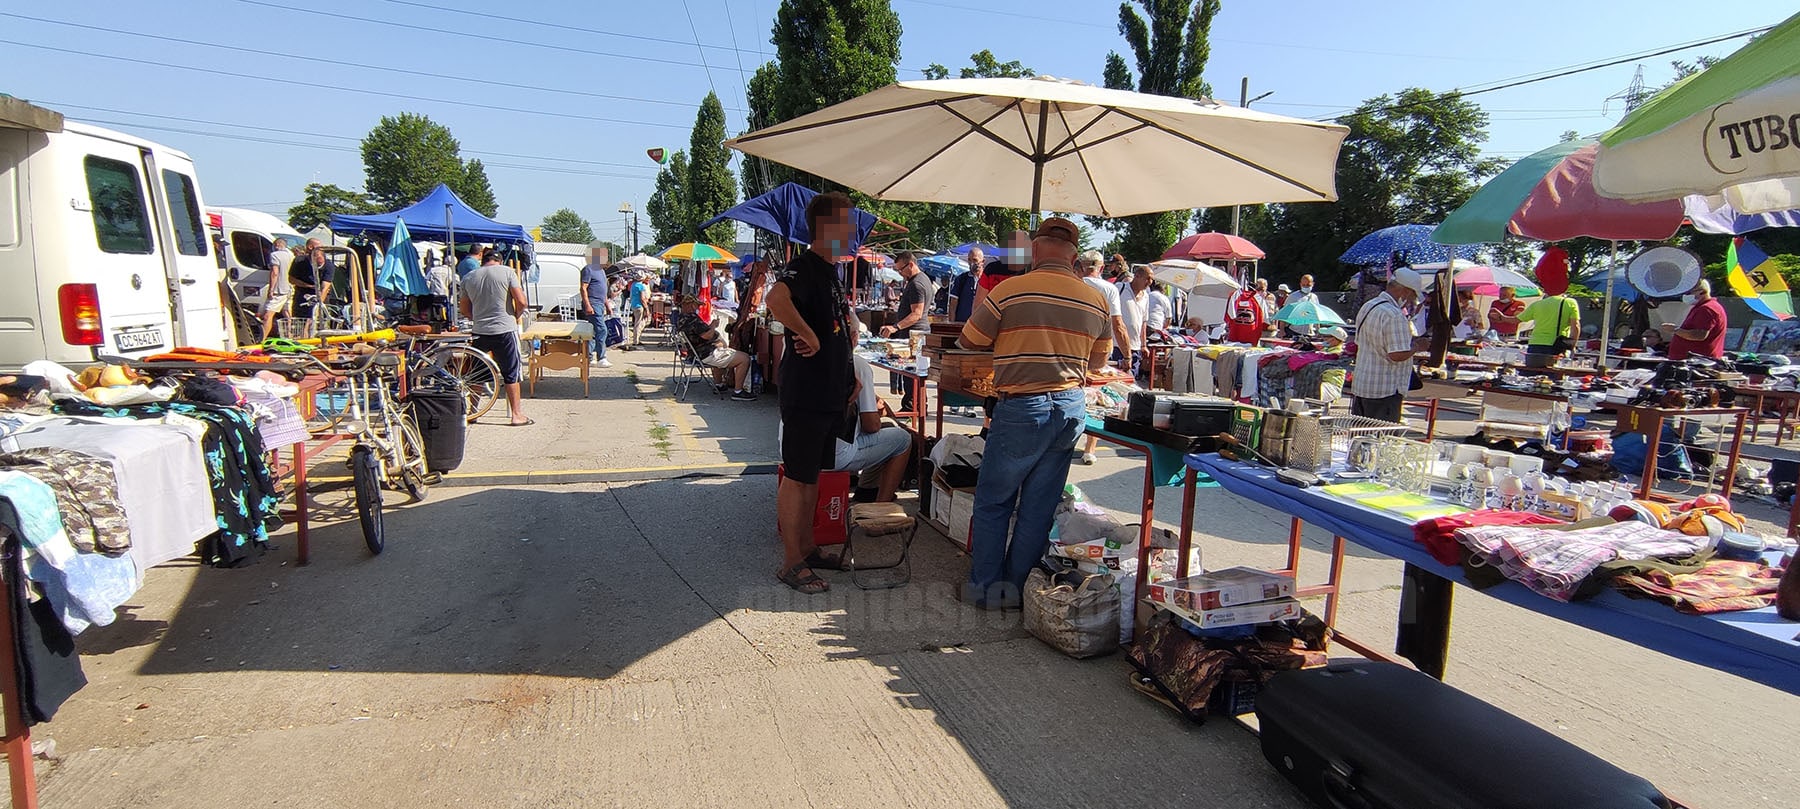 Bucharest Valea Cascadelor Flea Market